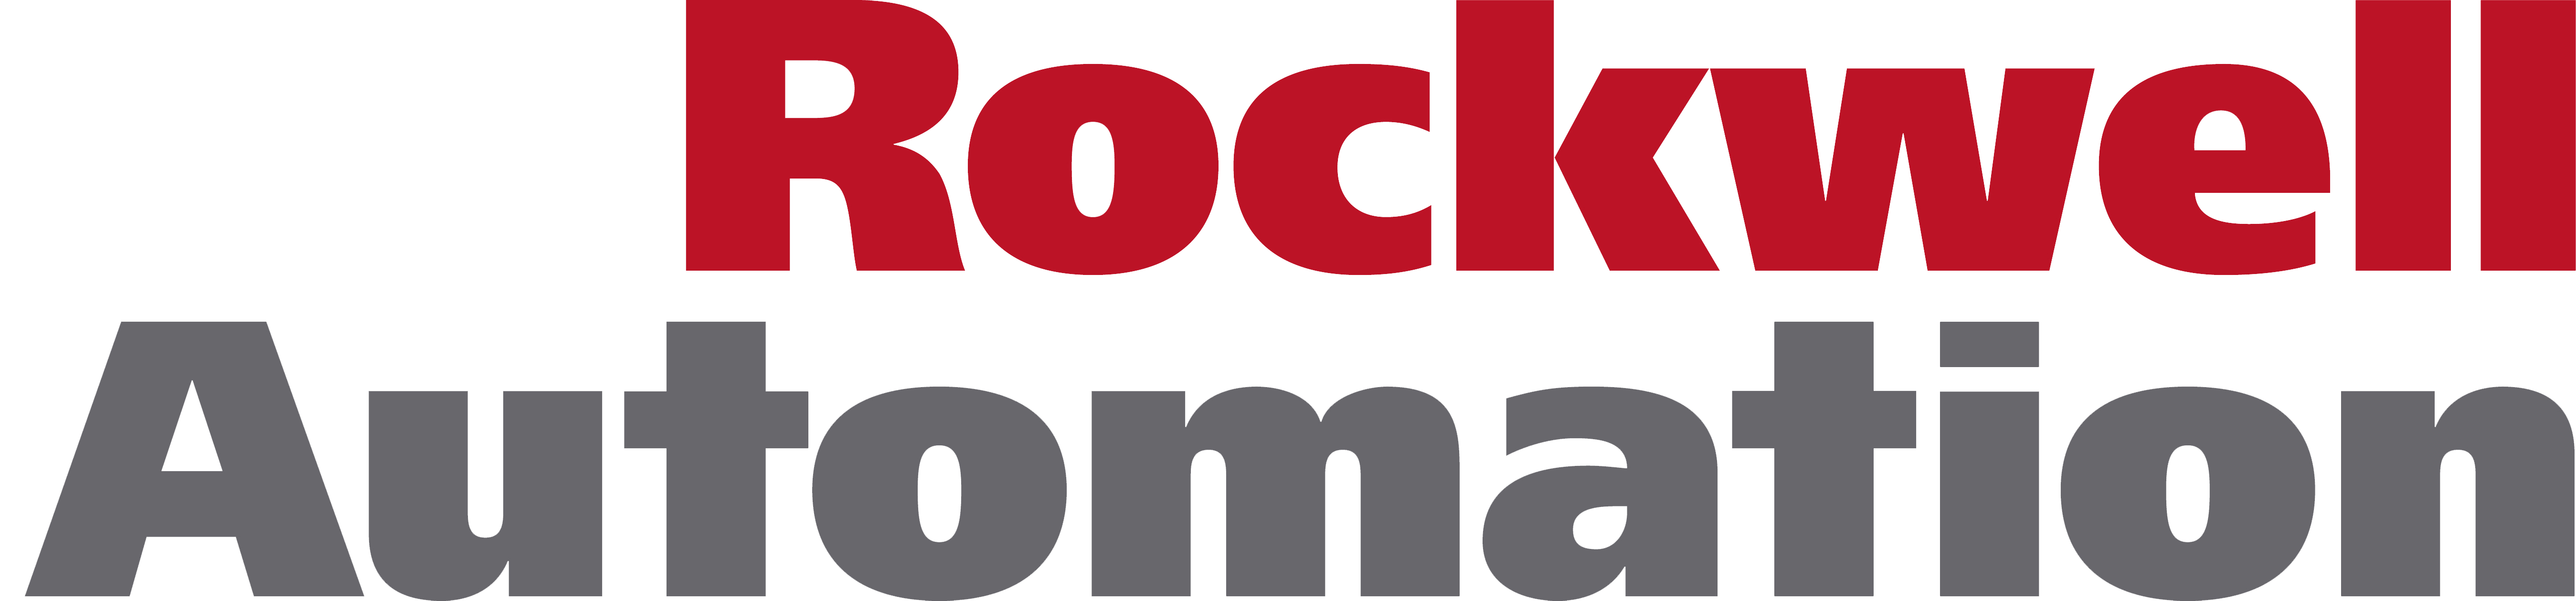 Rockwell Logo - Rockwell automation Logos